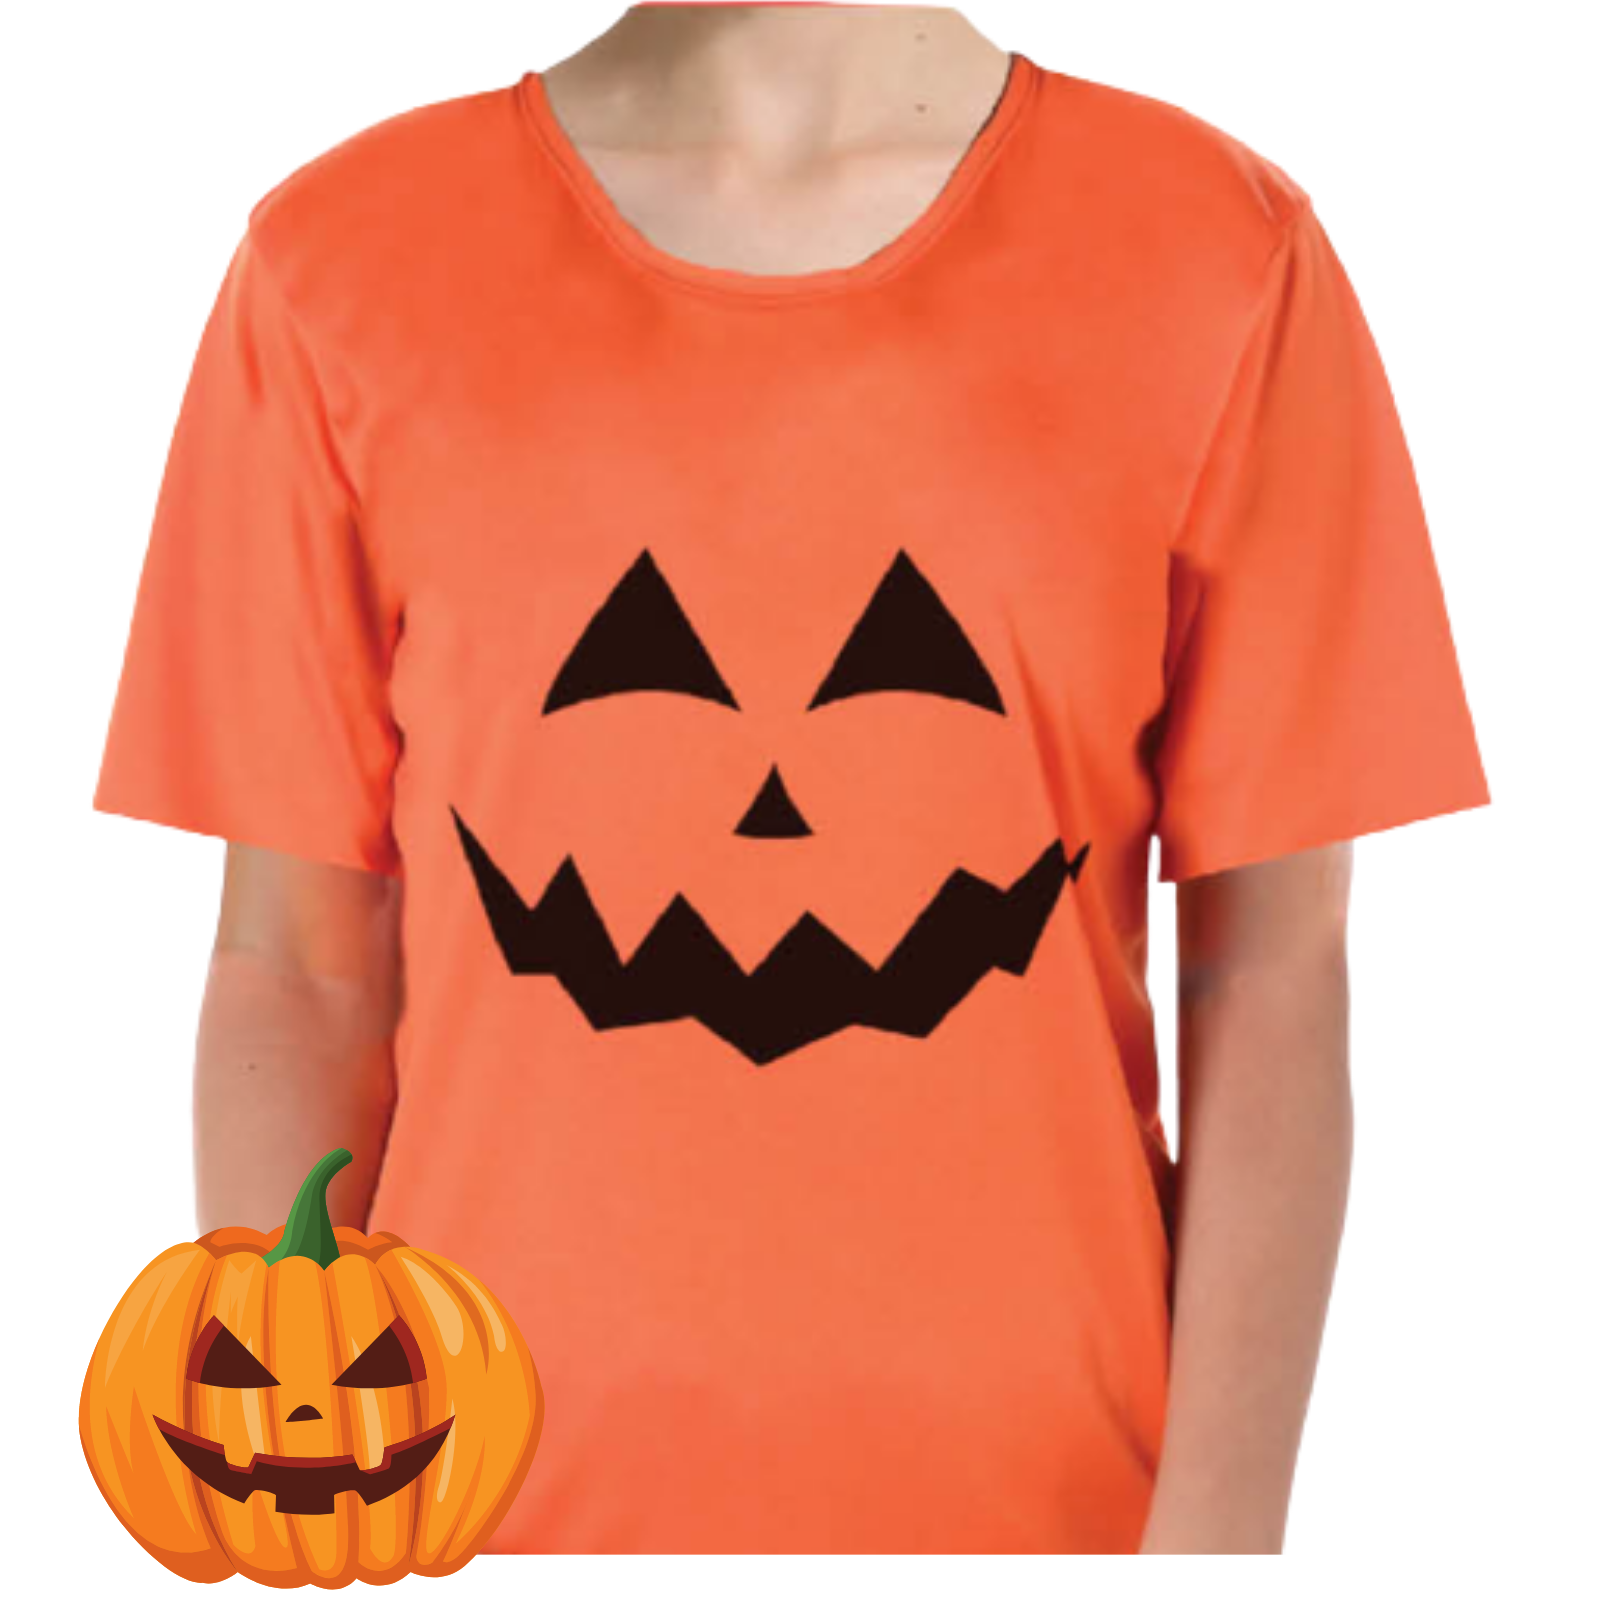 Kids Halloween T-Shirt Pumpkin Childrens Orange Jack O'Lantern Top - M (7-9 Years Old)